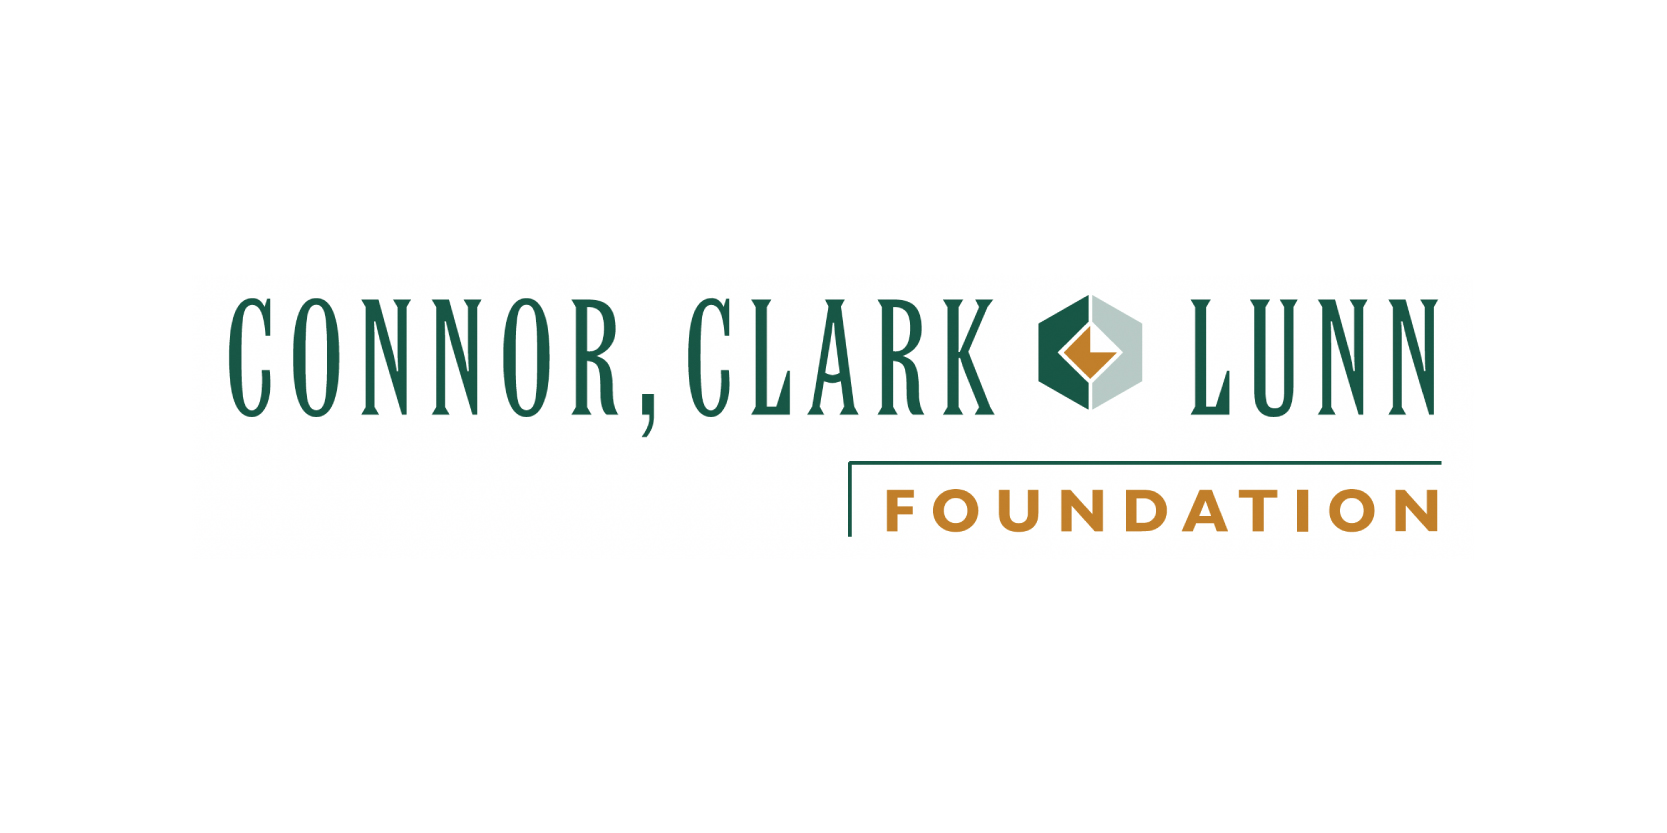 Connor, Clark, & Lunn Foundation logo